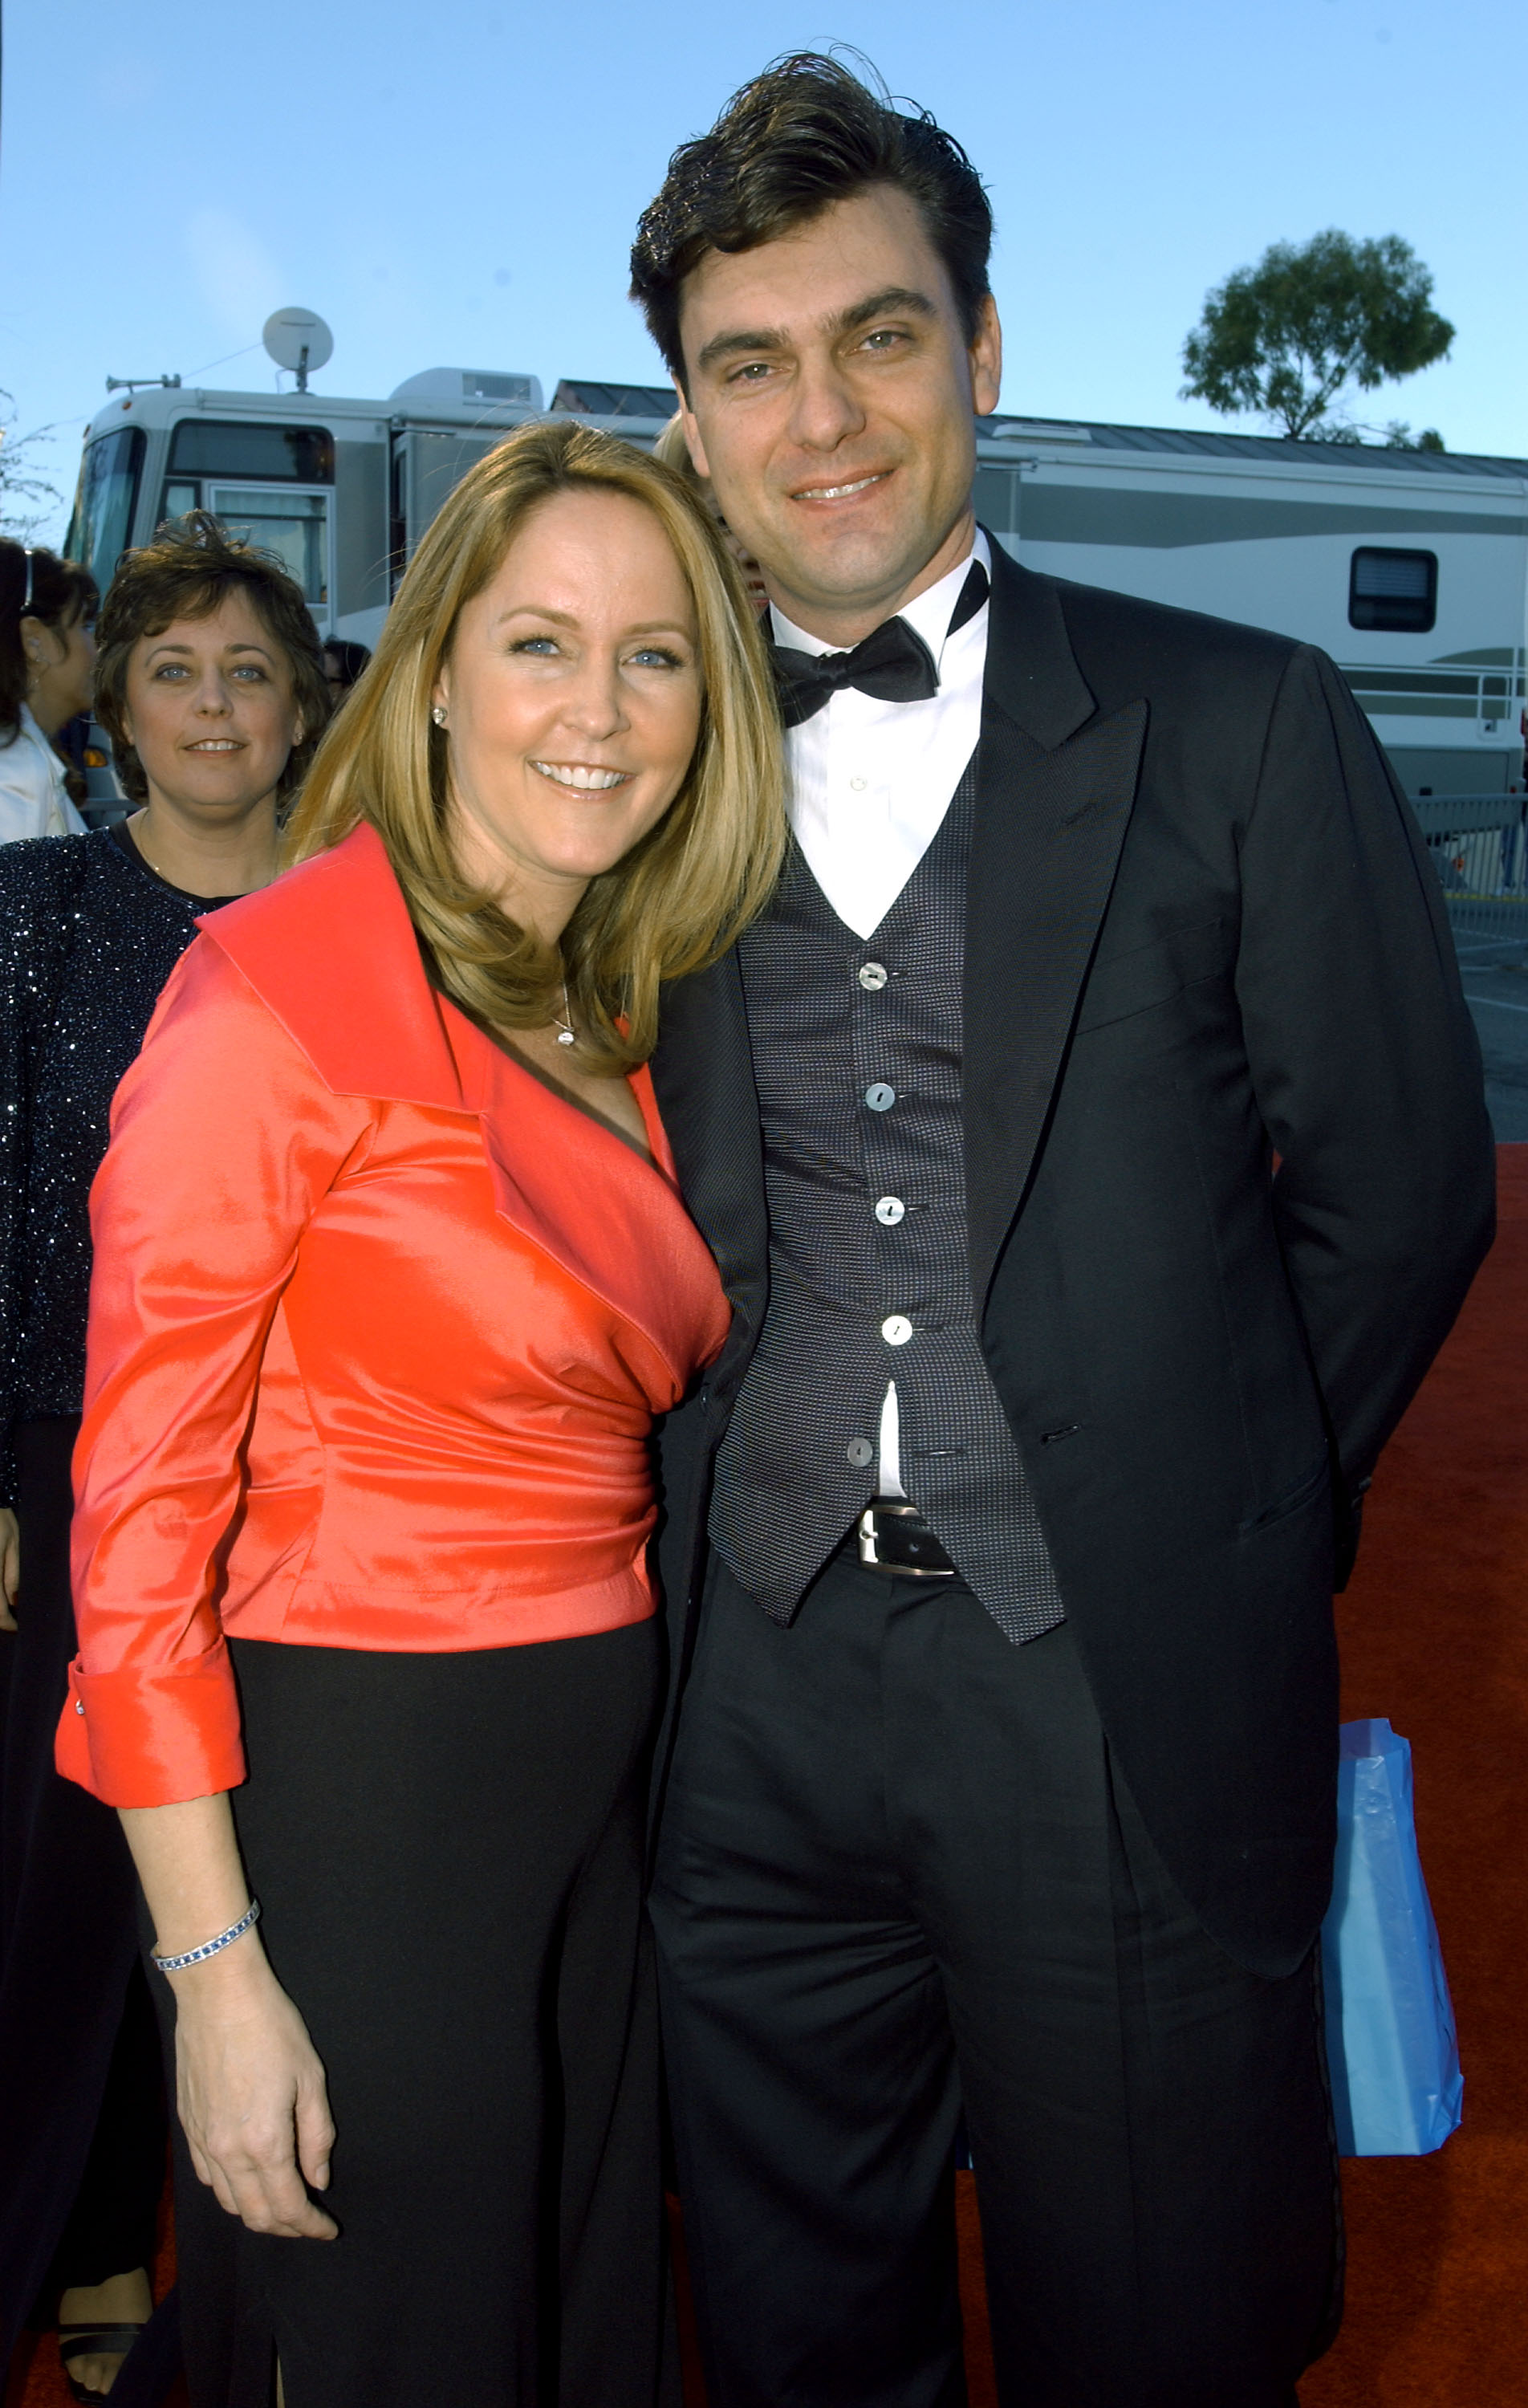 Erin Murphy et son mari Darren Dunckel aux TV Land Awards le 2 mars 2003 à Hollywood, Californie | Source : Getty Images